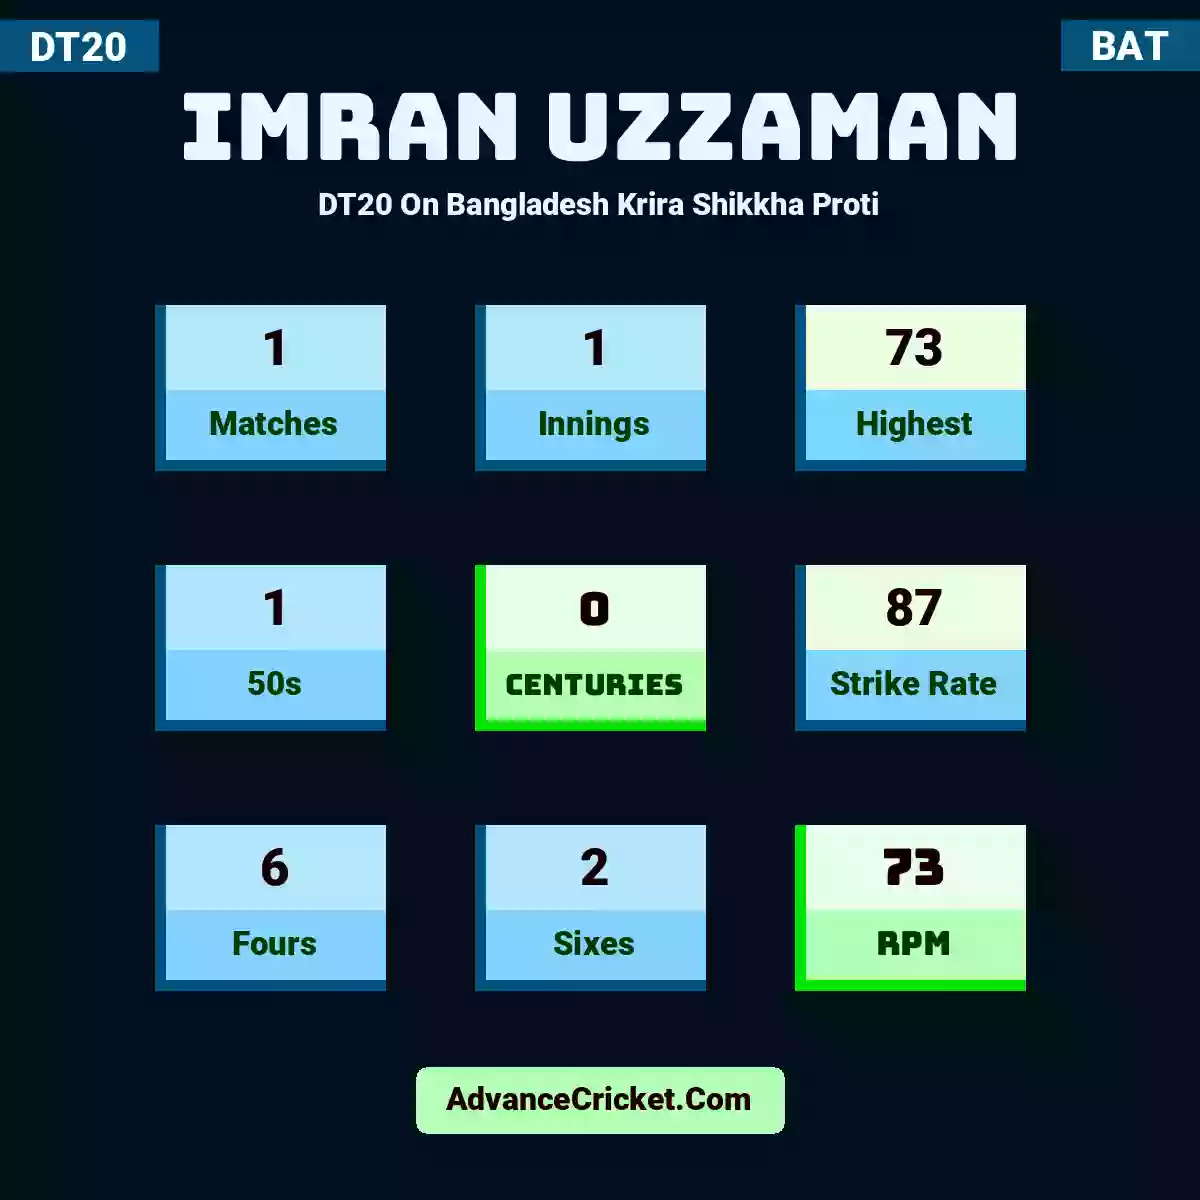 Imran Uzzaman DT20  On Bangladesh Krira Shikkha Proti, Imran Uzzaman played 1 matches, scored 73 runs as highest, 1 half-centuries, and 0 centuries, with a strike rate of 87. I.Uzzaman hit 6 fours and 2 sixes, with an RPM of 73.